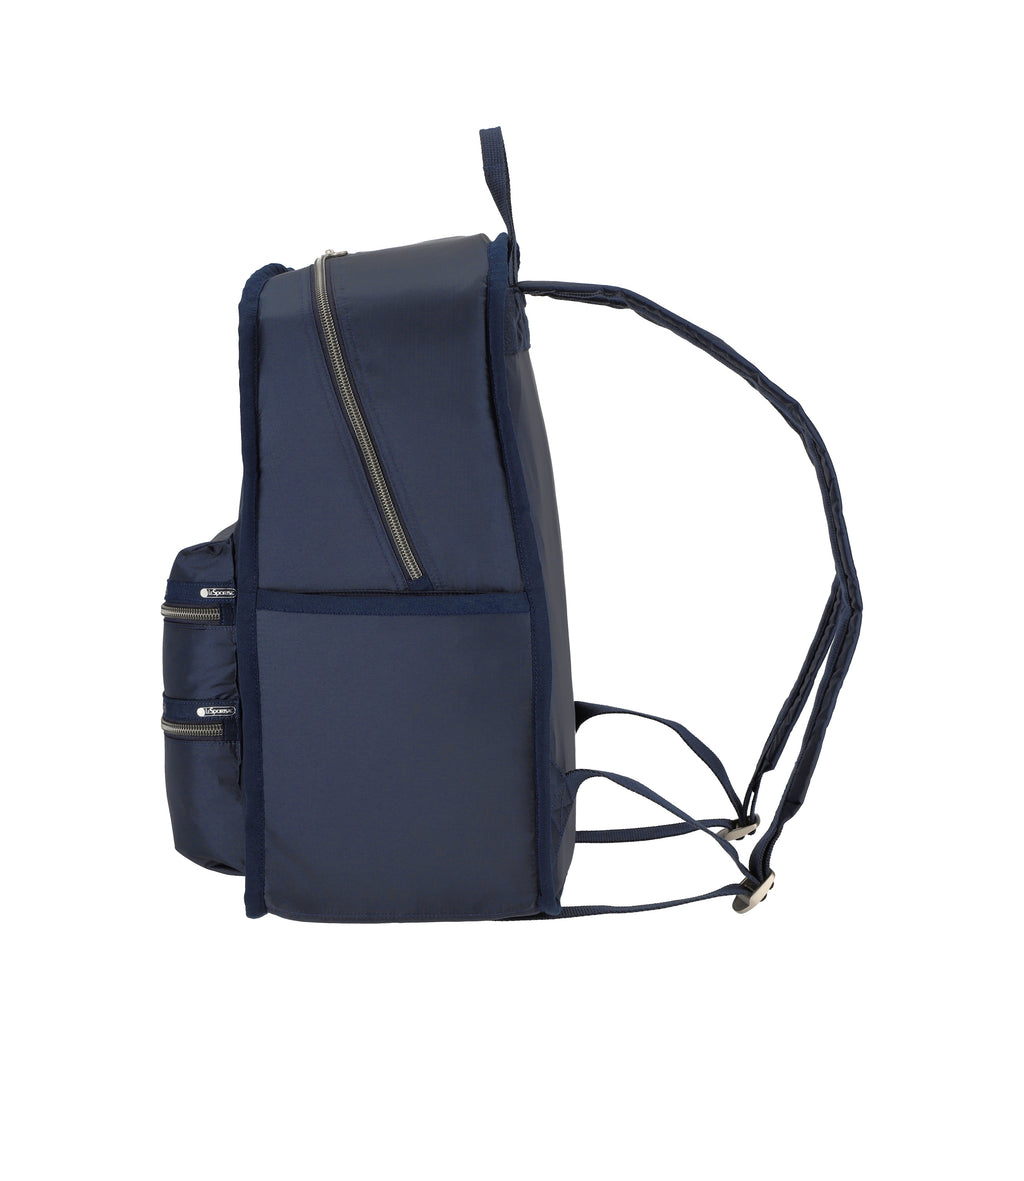 Functional Backpack - 22148453040176